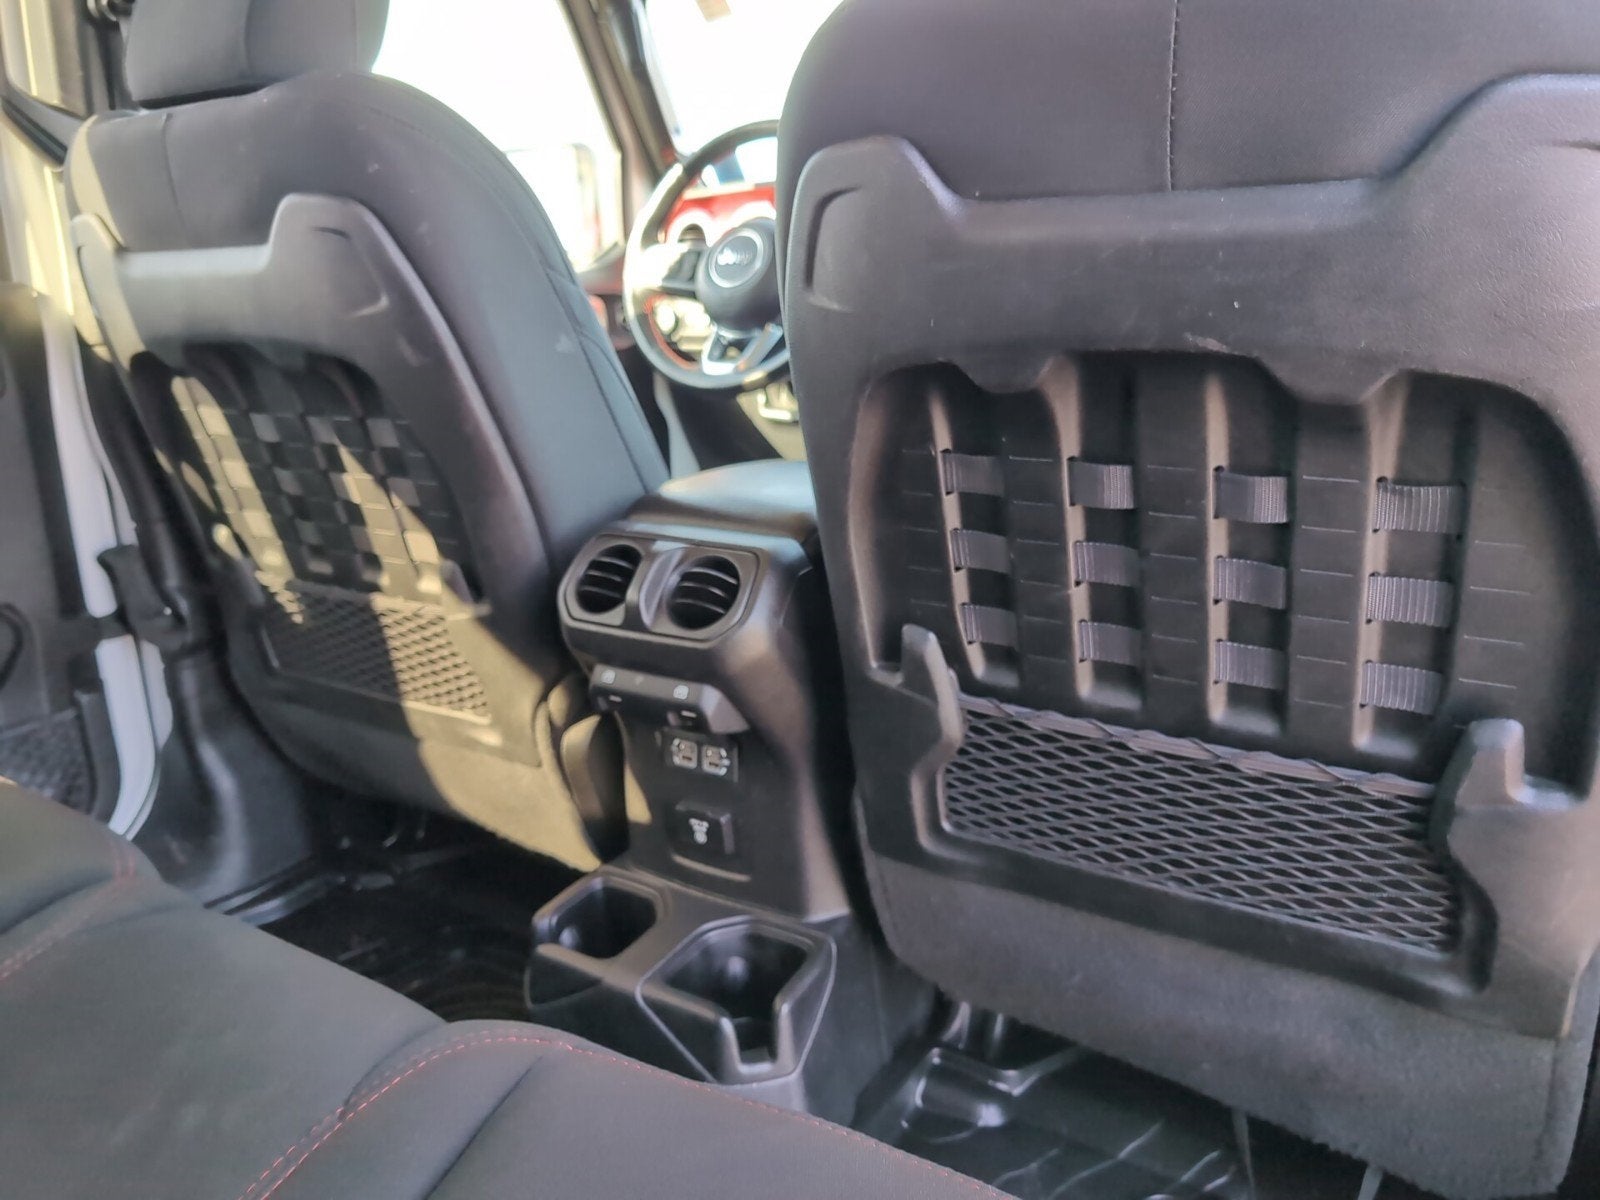 2020 Jeep Wrangler Unlimited Rubicon